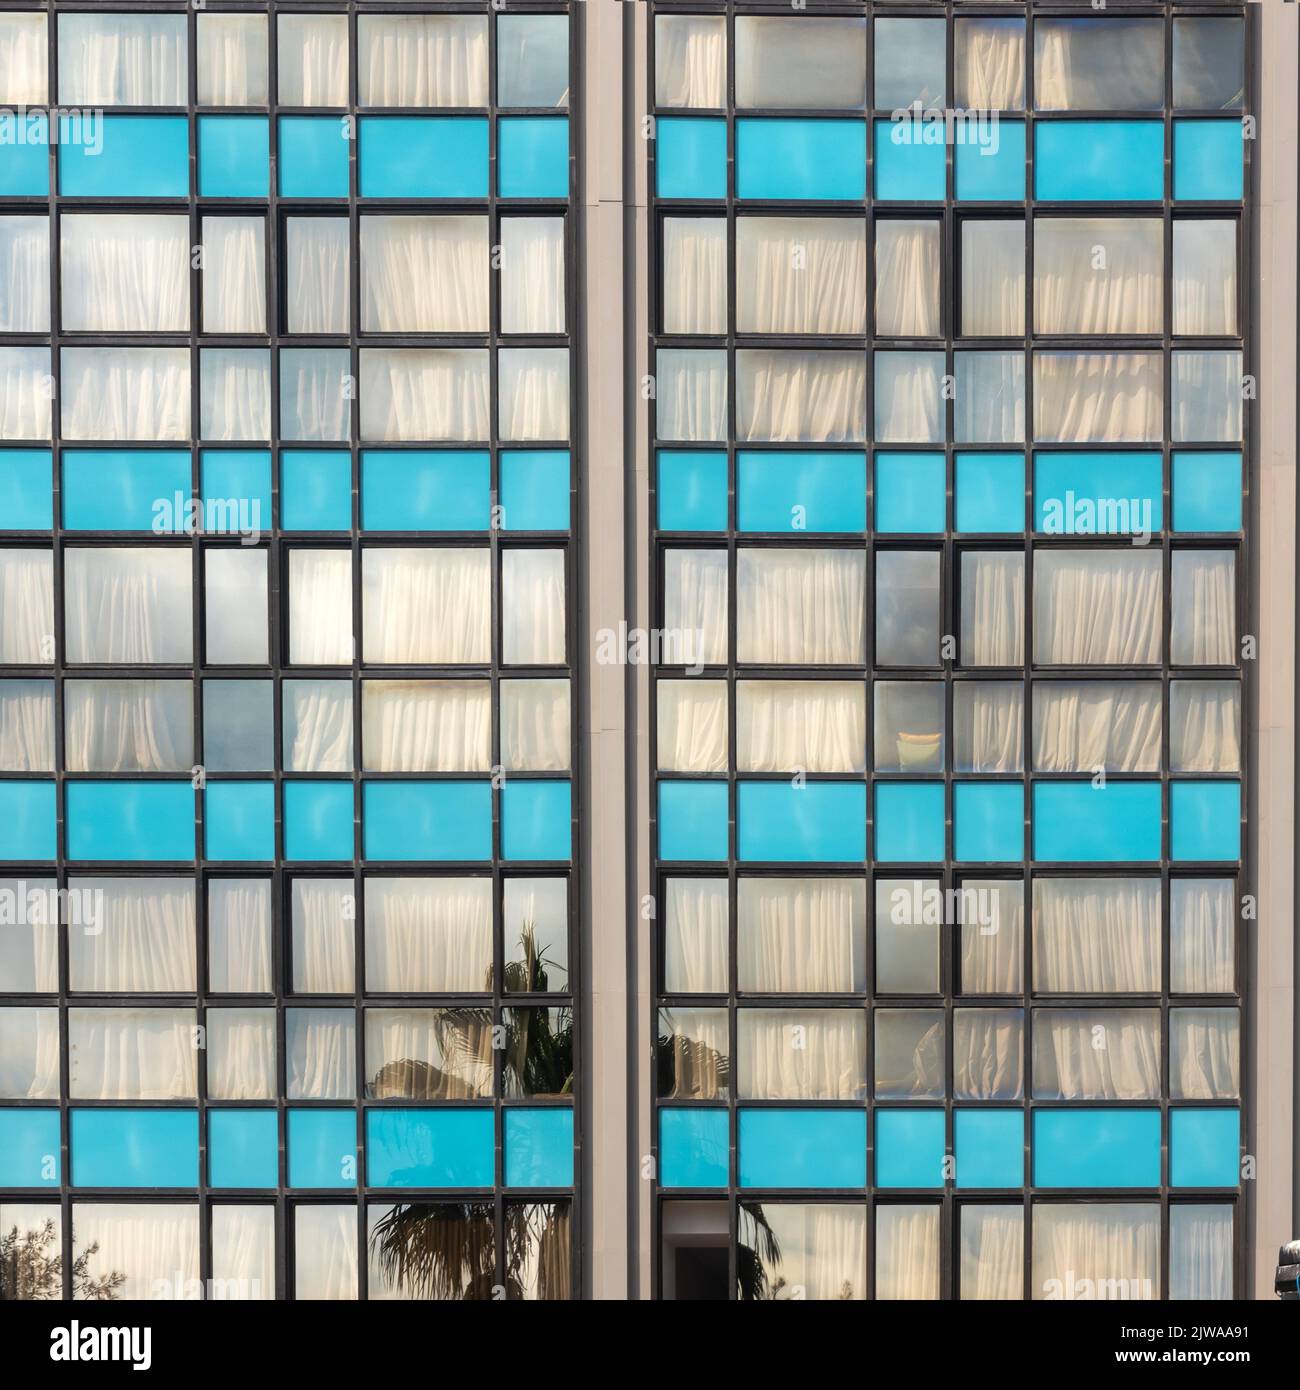 Old soviet constructivist industrial building exterior facade with large windows, blue glass bricks Stock Photo